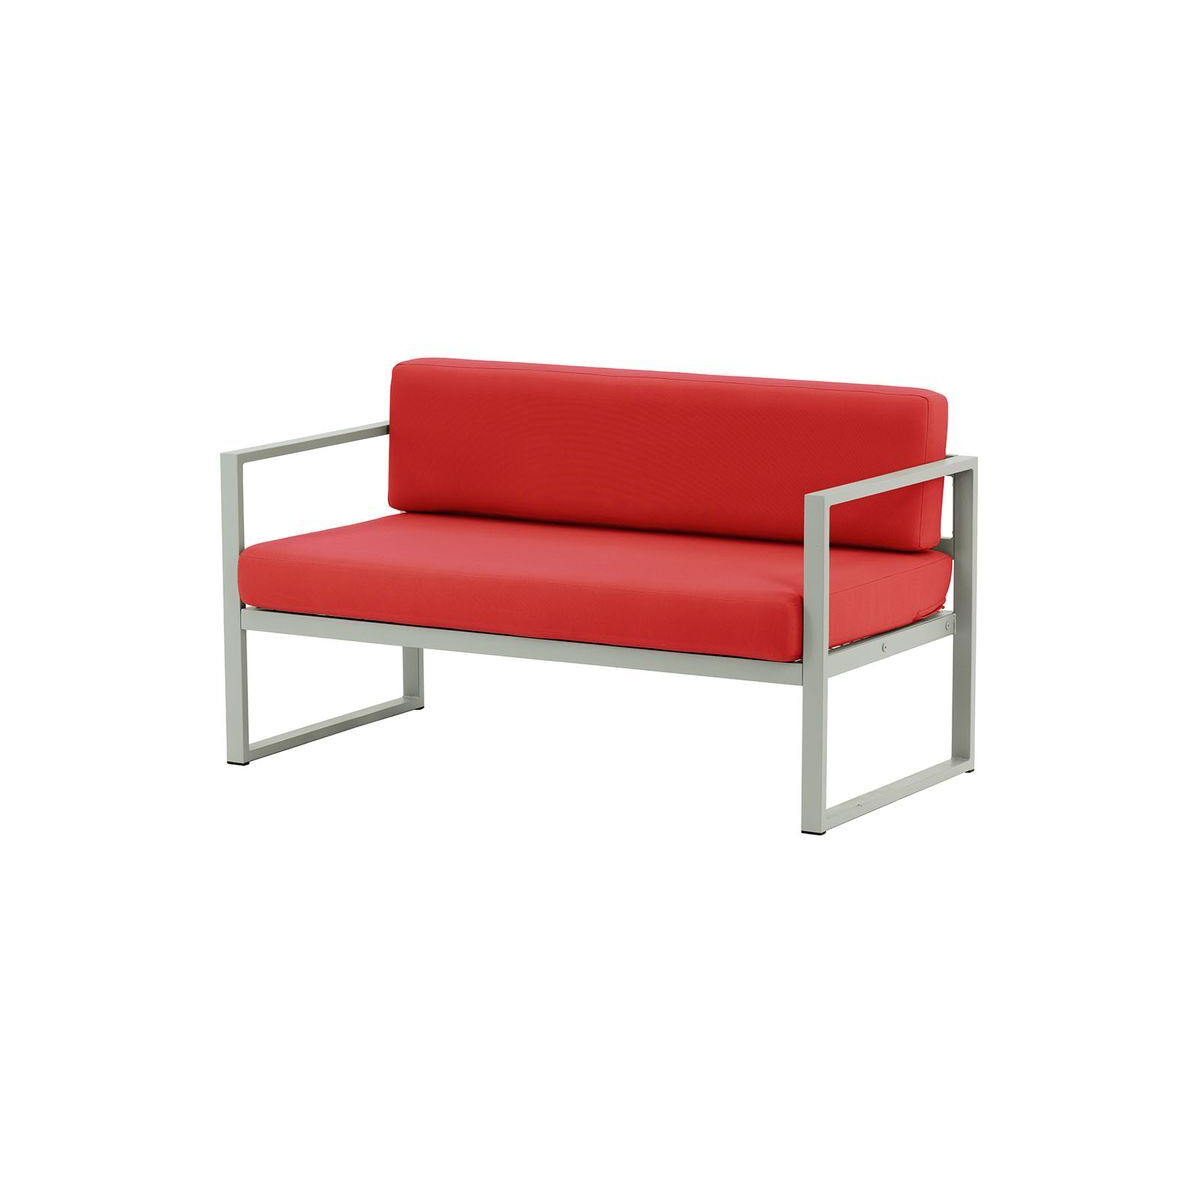 Sunset Garden 2 Seater Sofa, red, Leg colour: grey steel - image 1